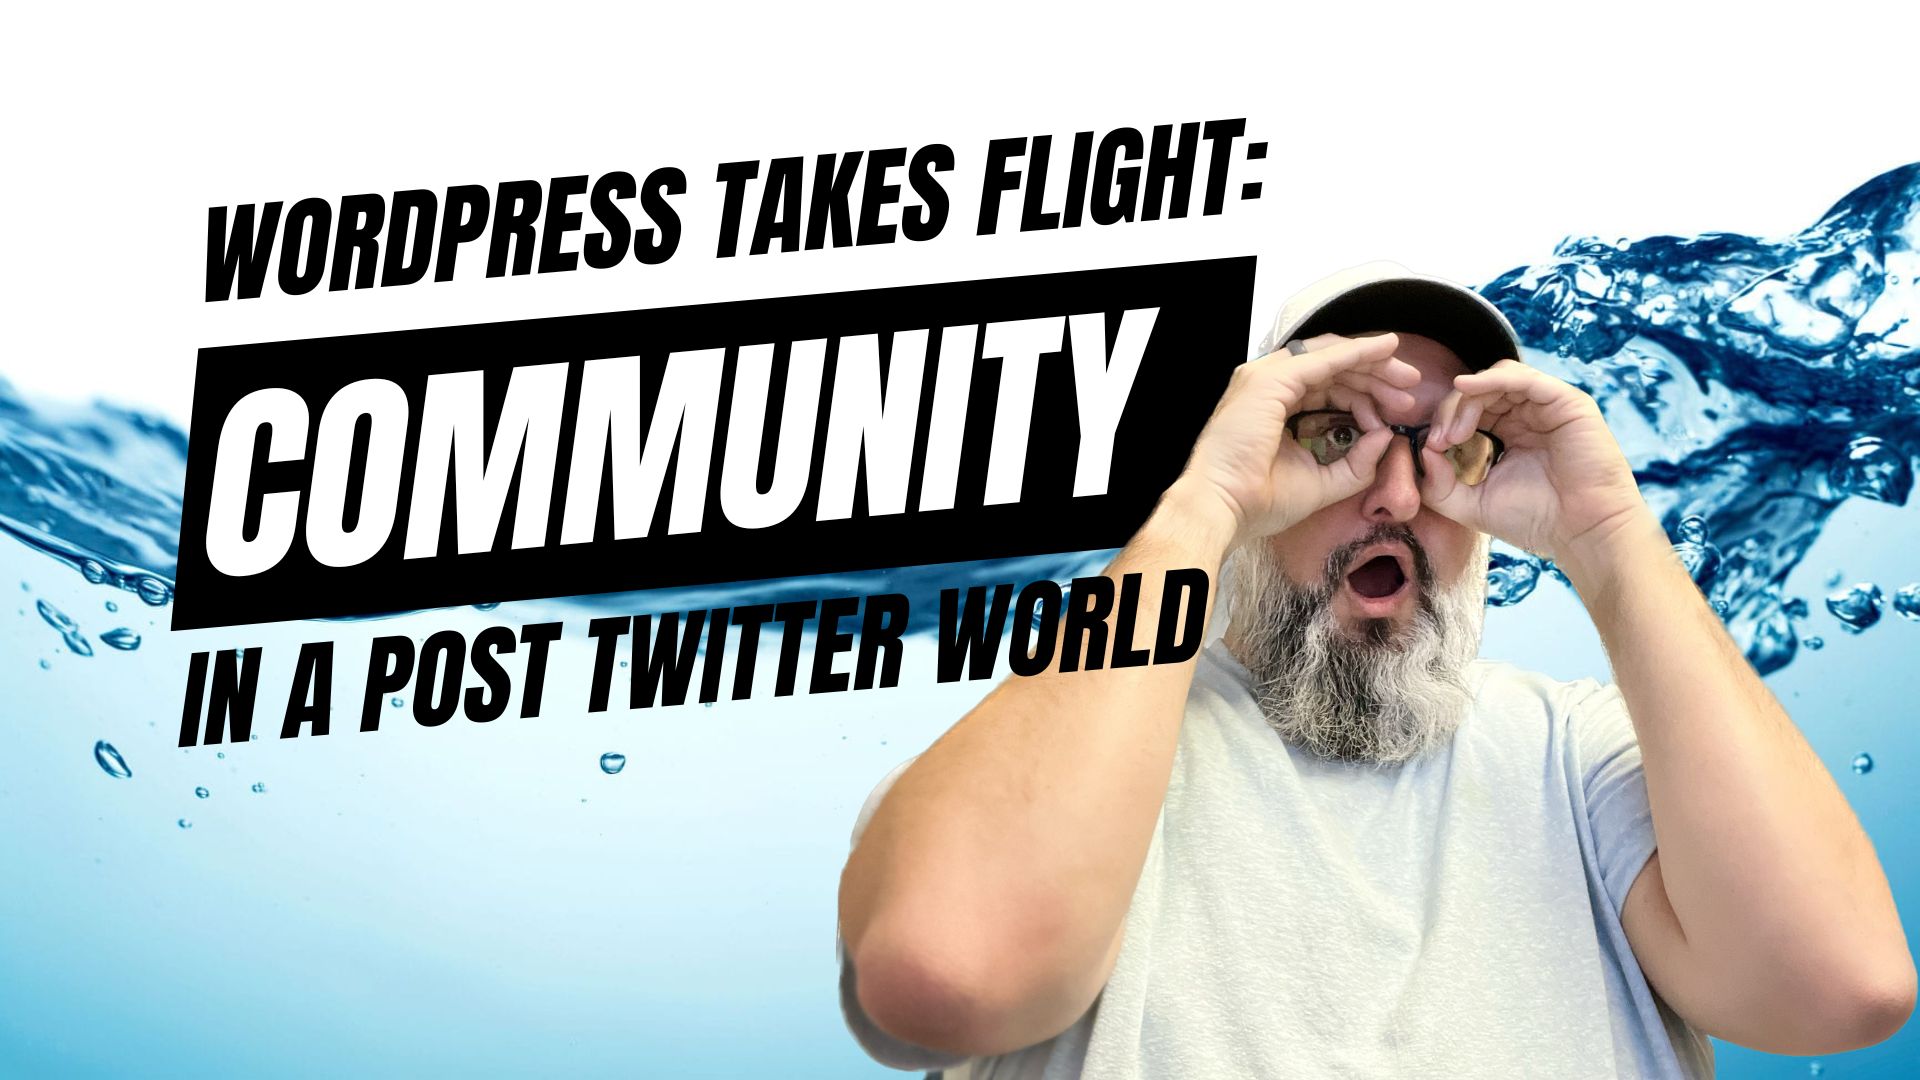 EP435 - WordPress Takes Flight: Community in a Post Twitter World